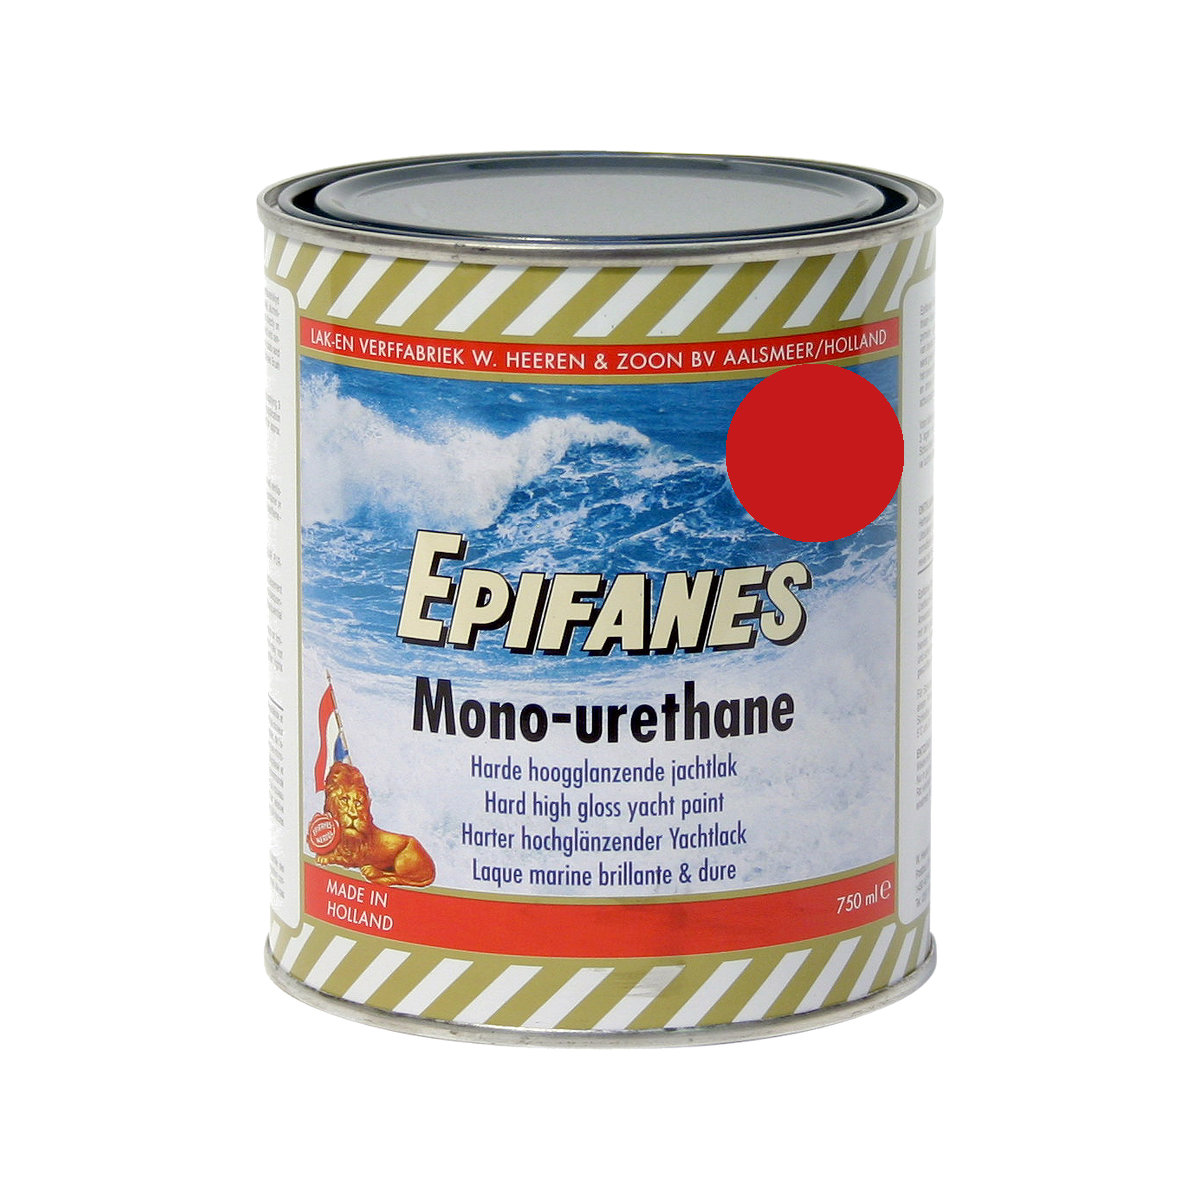 Epifanes mono-urethane jachtlak - rood 3116, 750ml